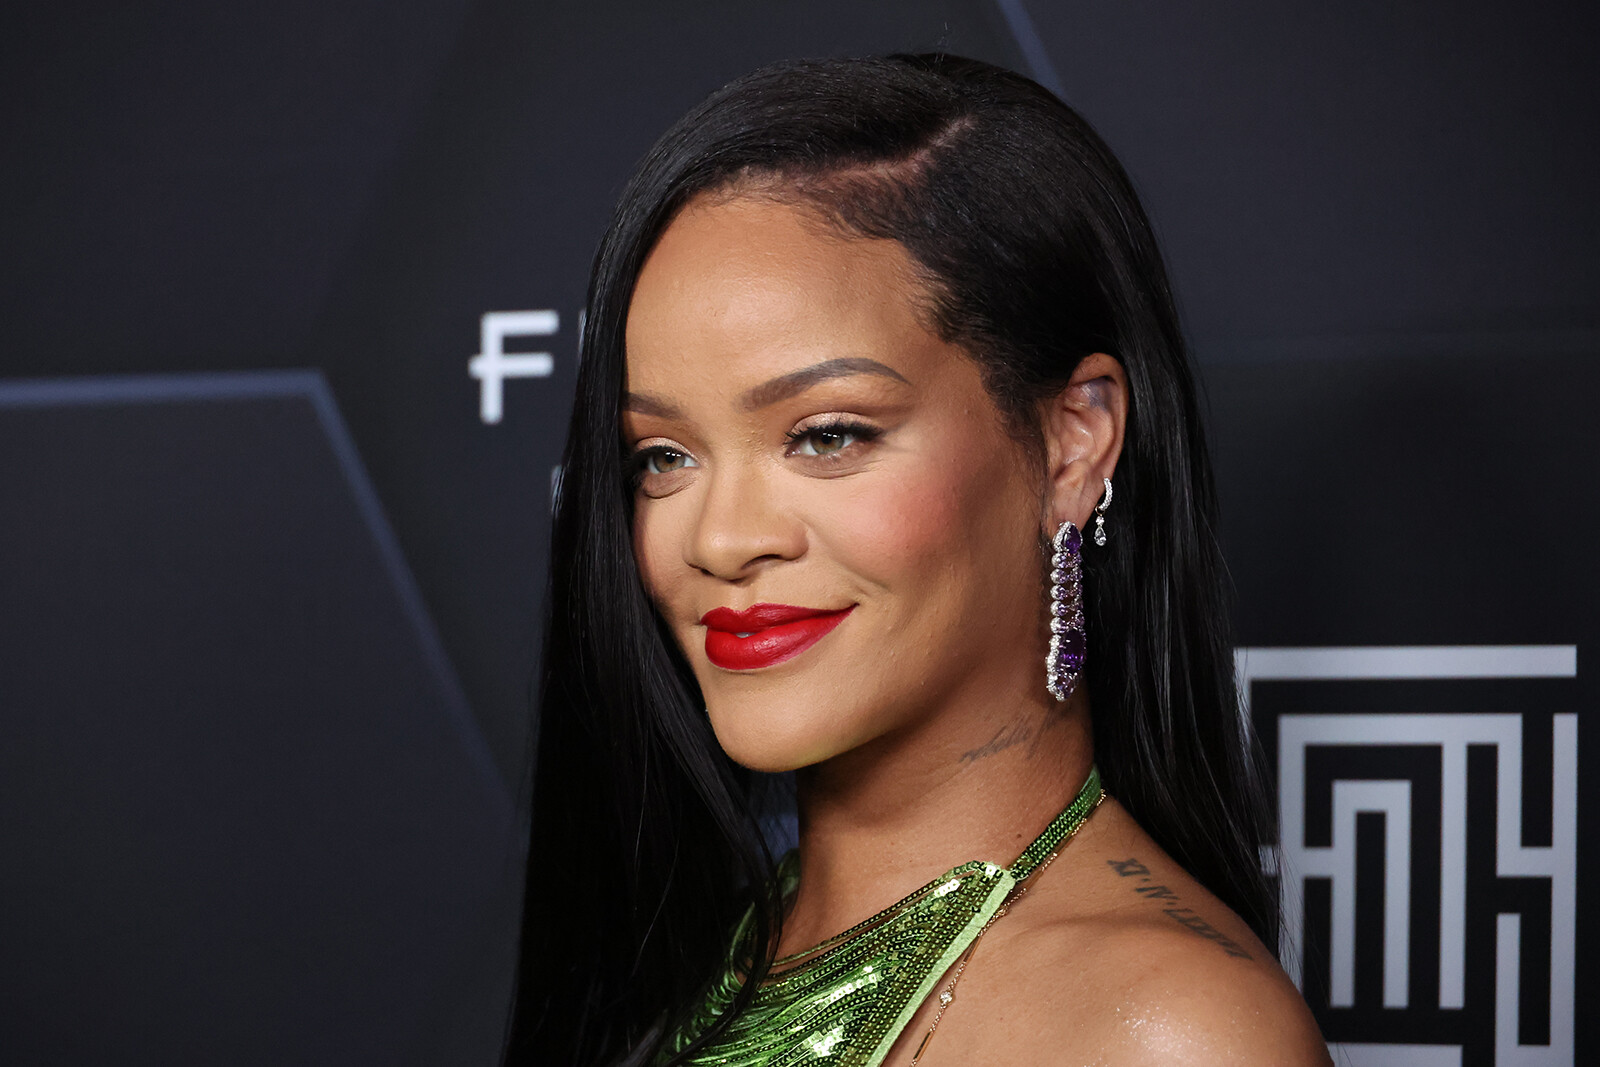 <i>Mike Coppola/Getty Images</i><br/>Rihanna